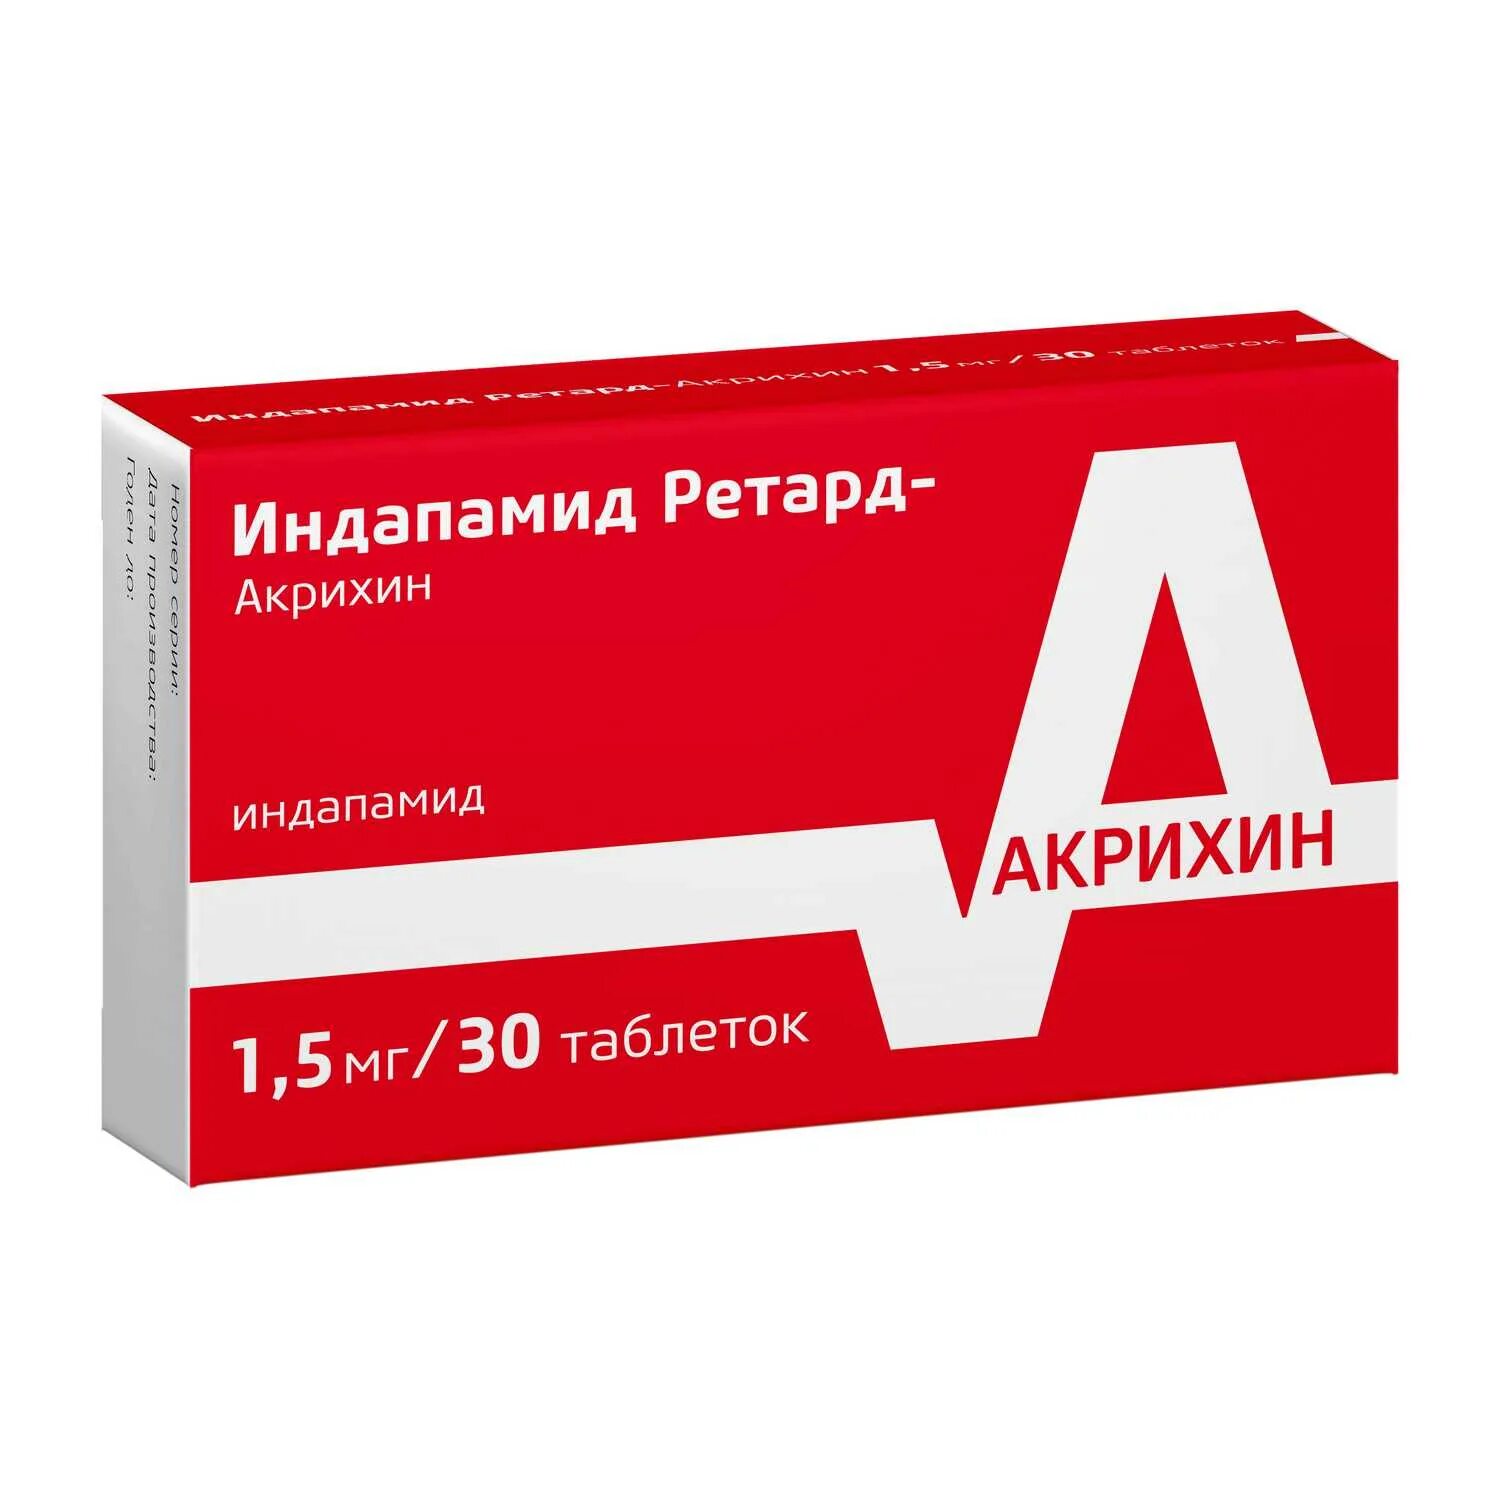 Индапамид ретард Акрихин. Индапамид 1.5 Польфарма. Индапамид ретард 1.5 мг.